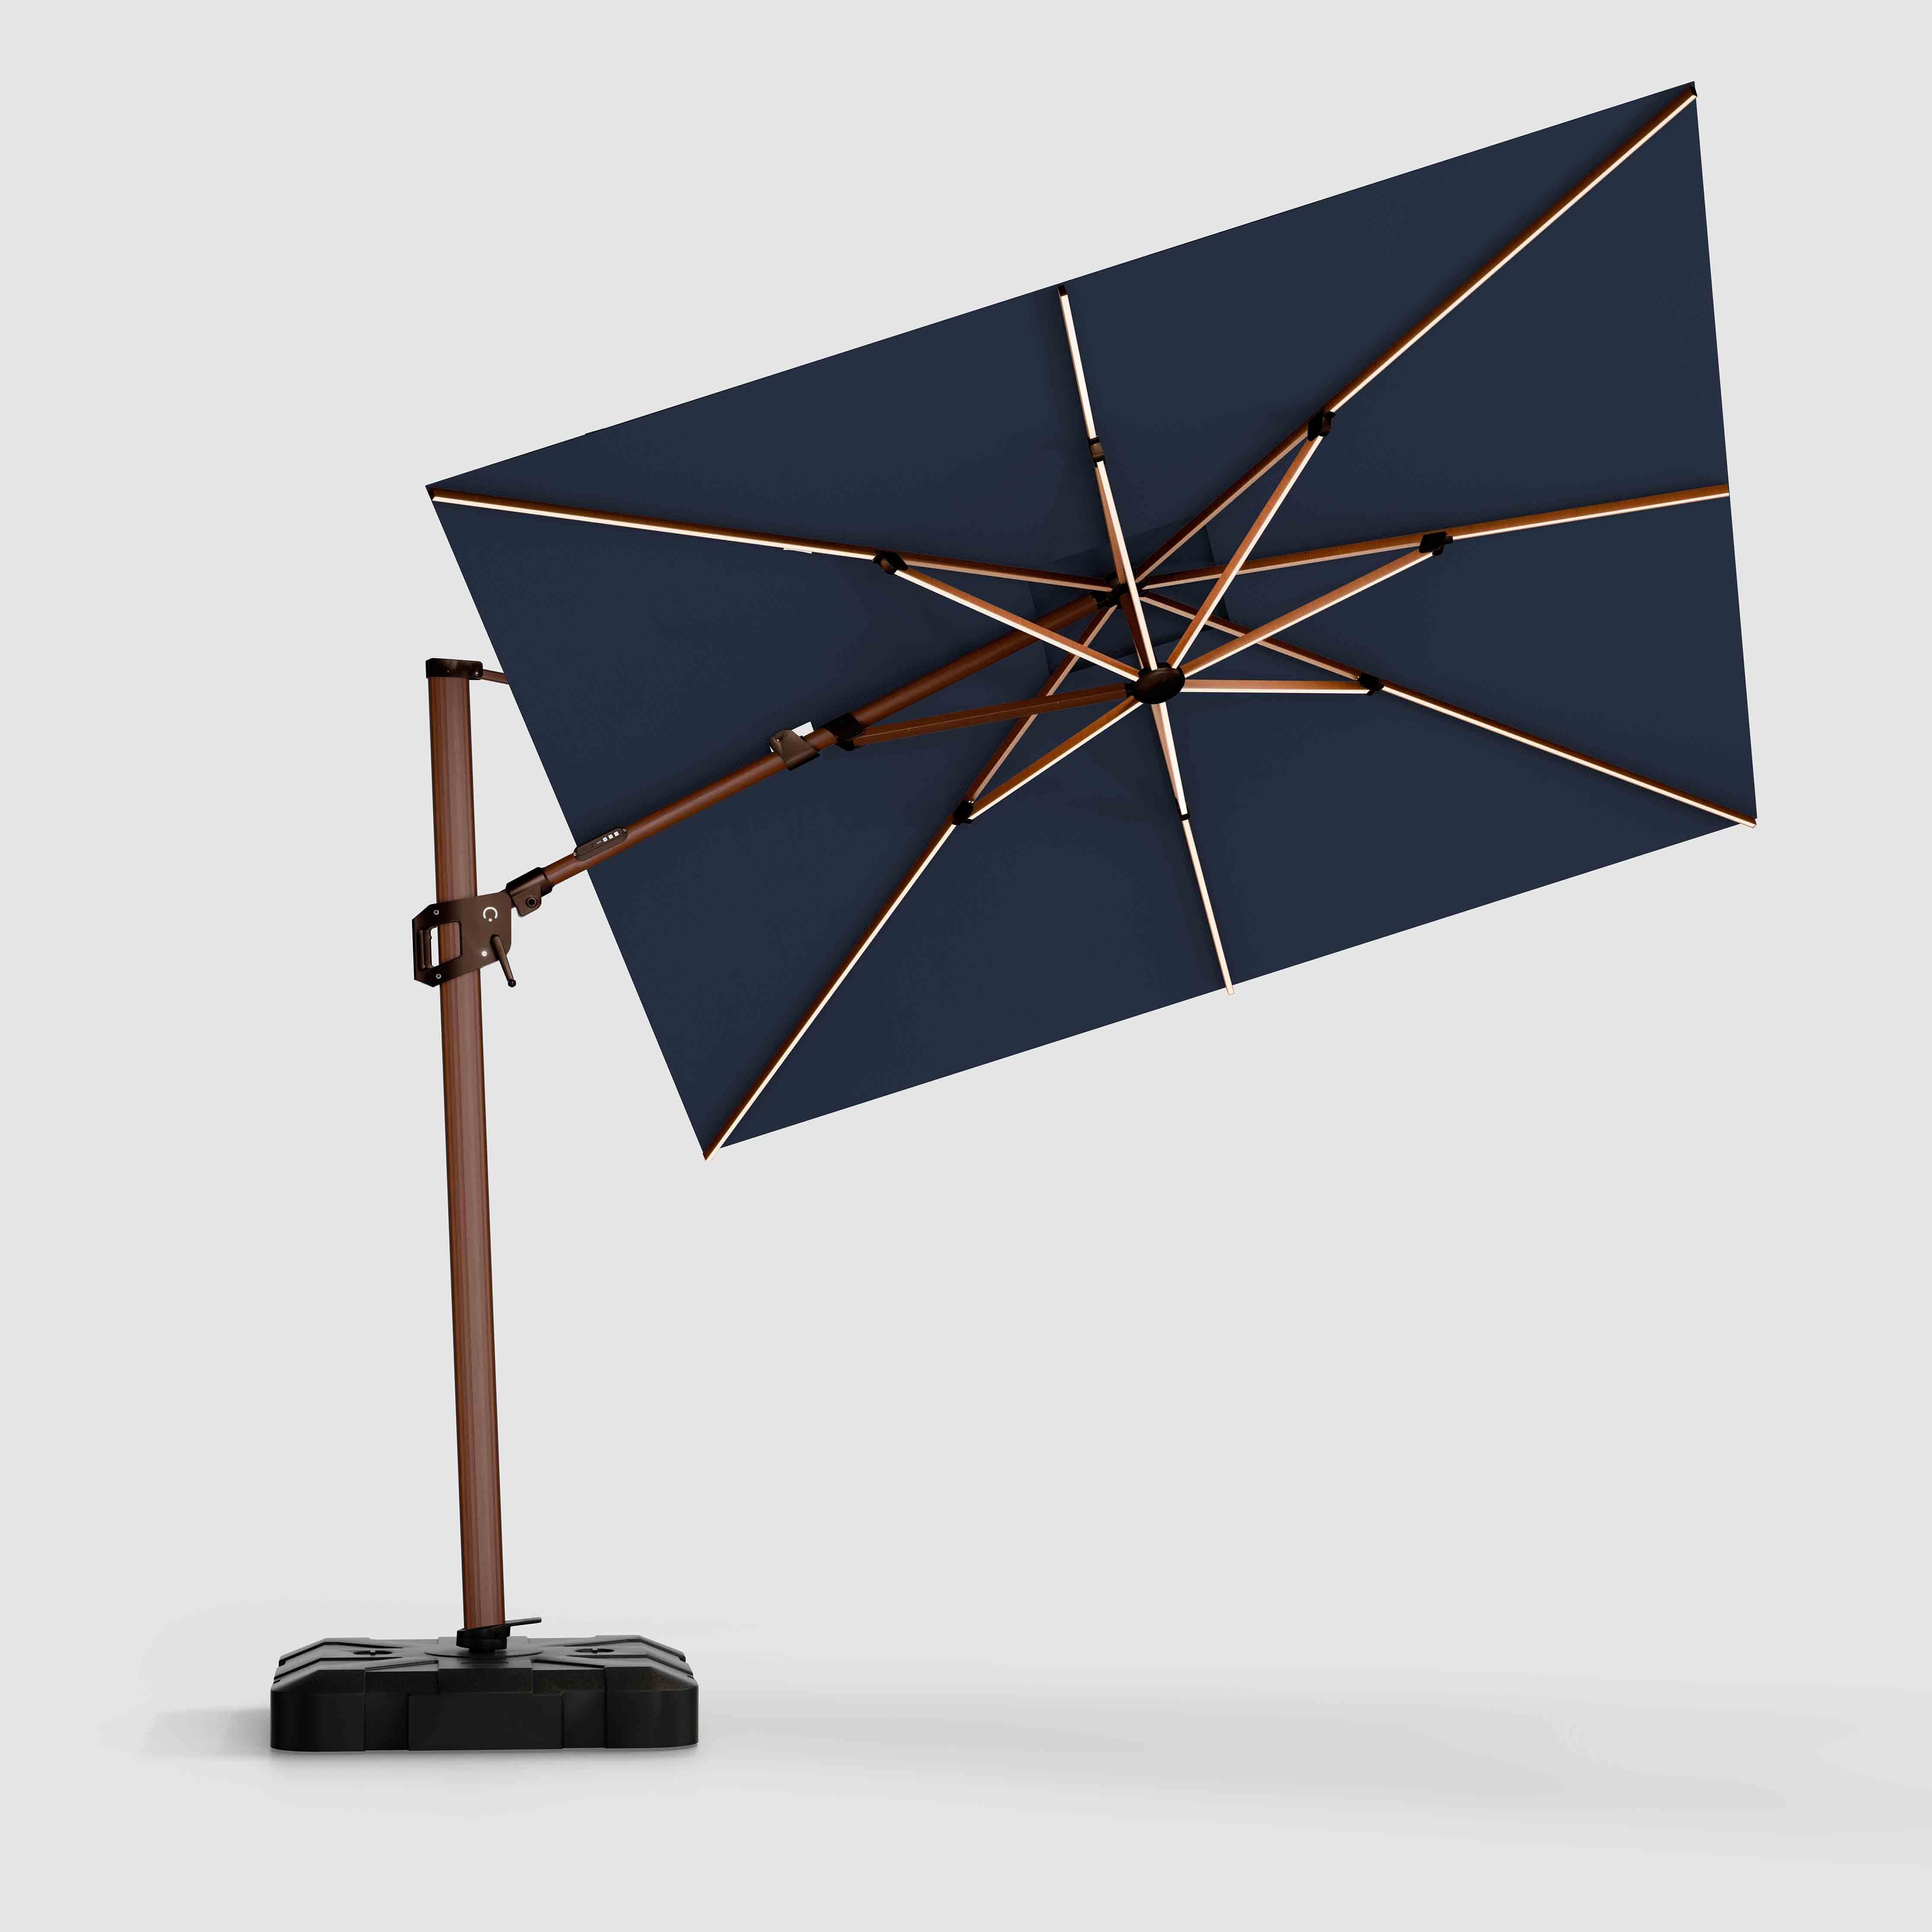 The Supreme Wooden™ - Sunbrella Canvas Navy